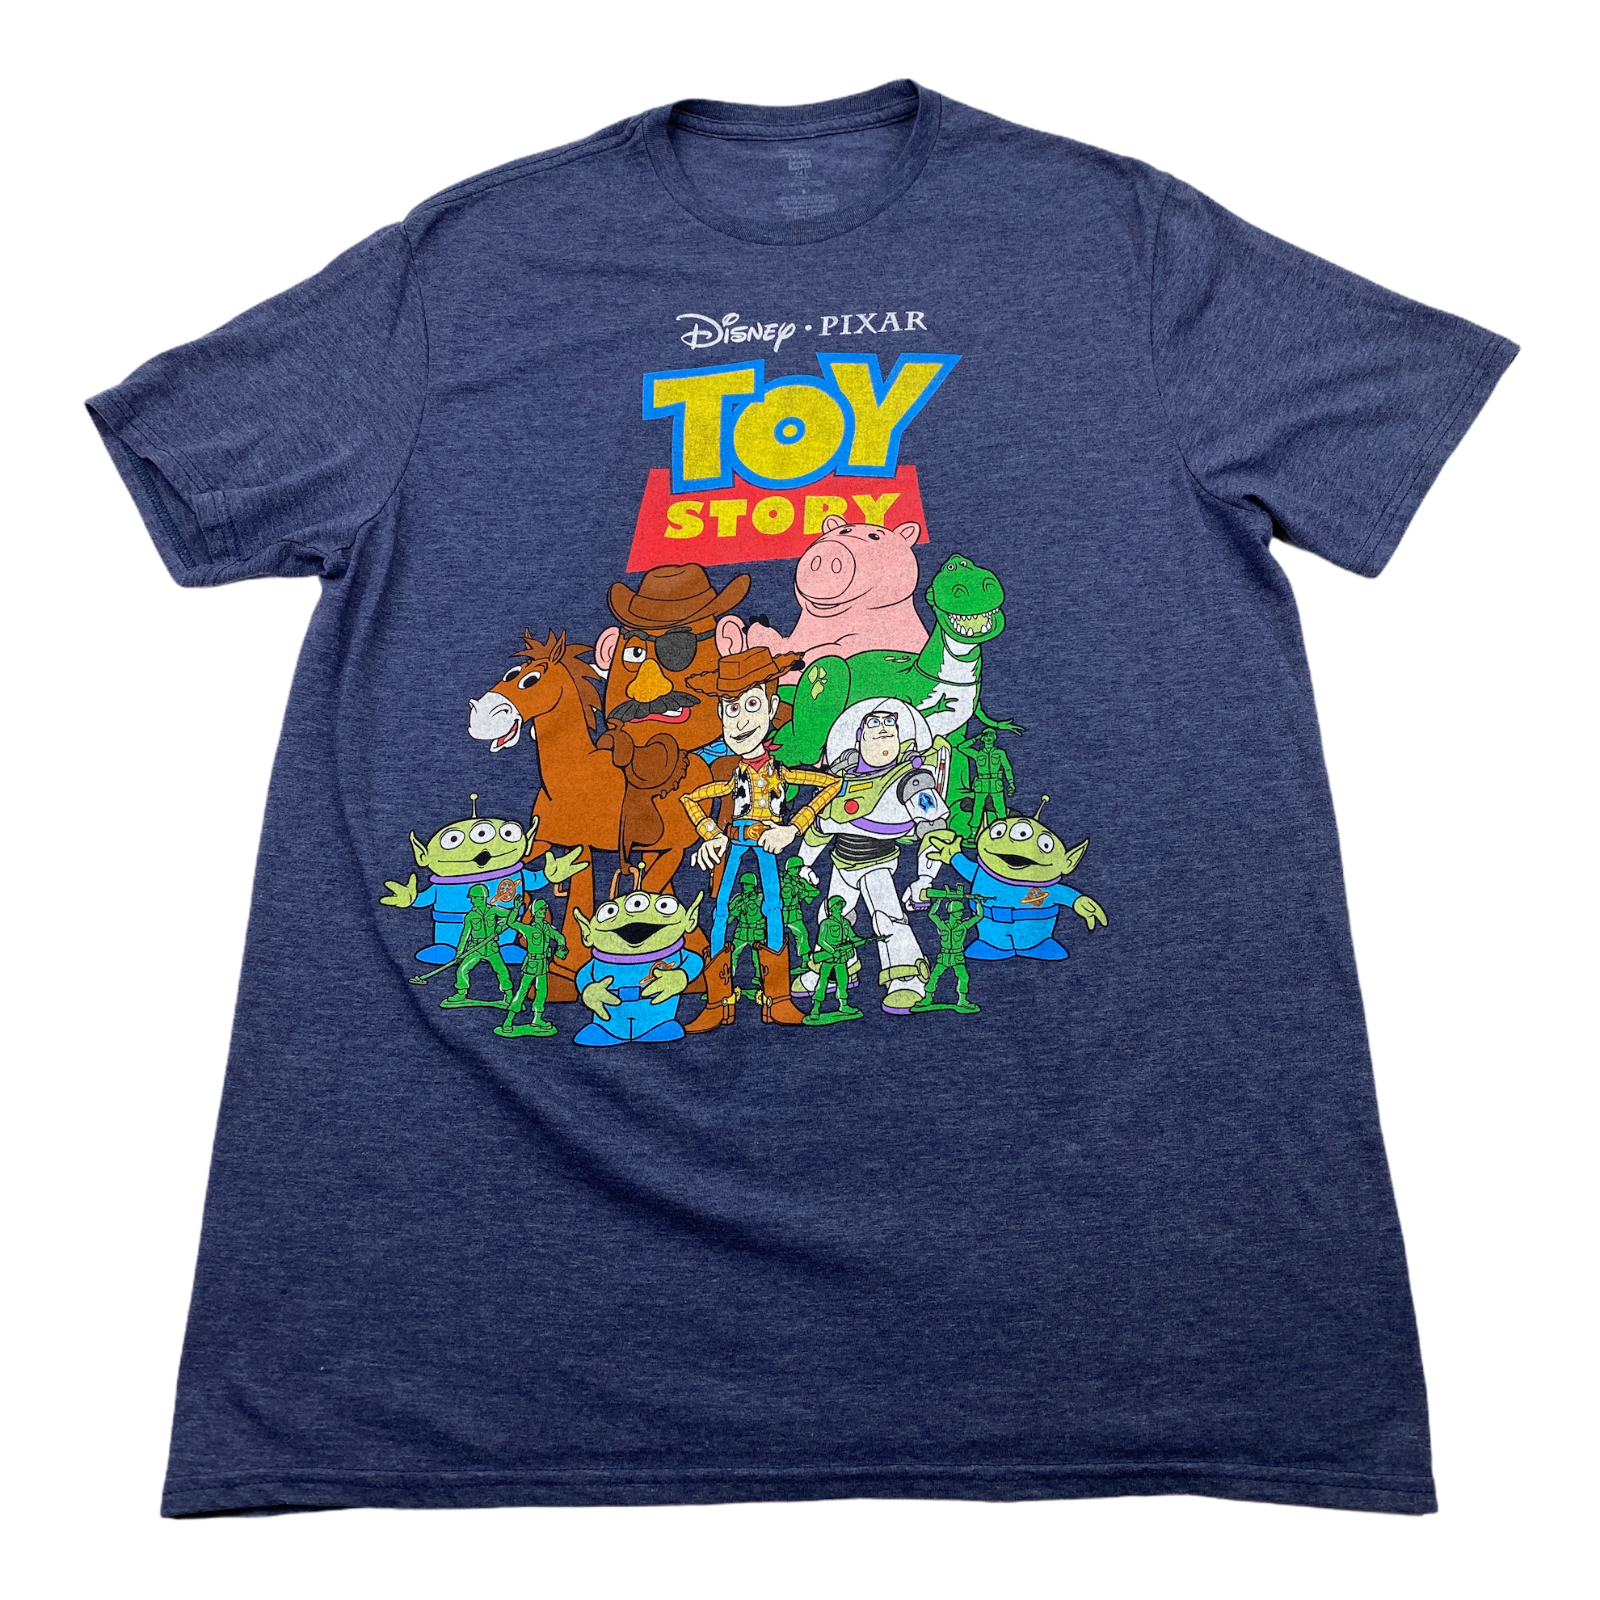 Disney pixar toy story gray short sleeve t shirt size large